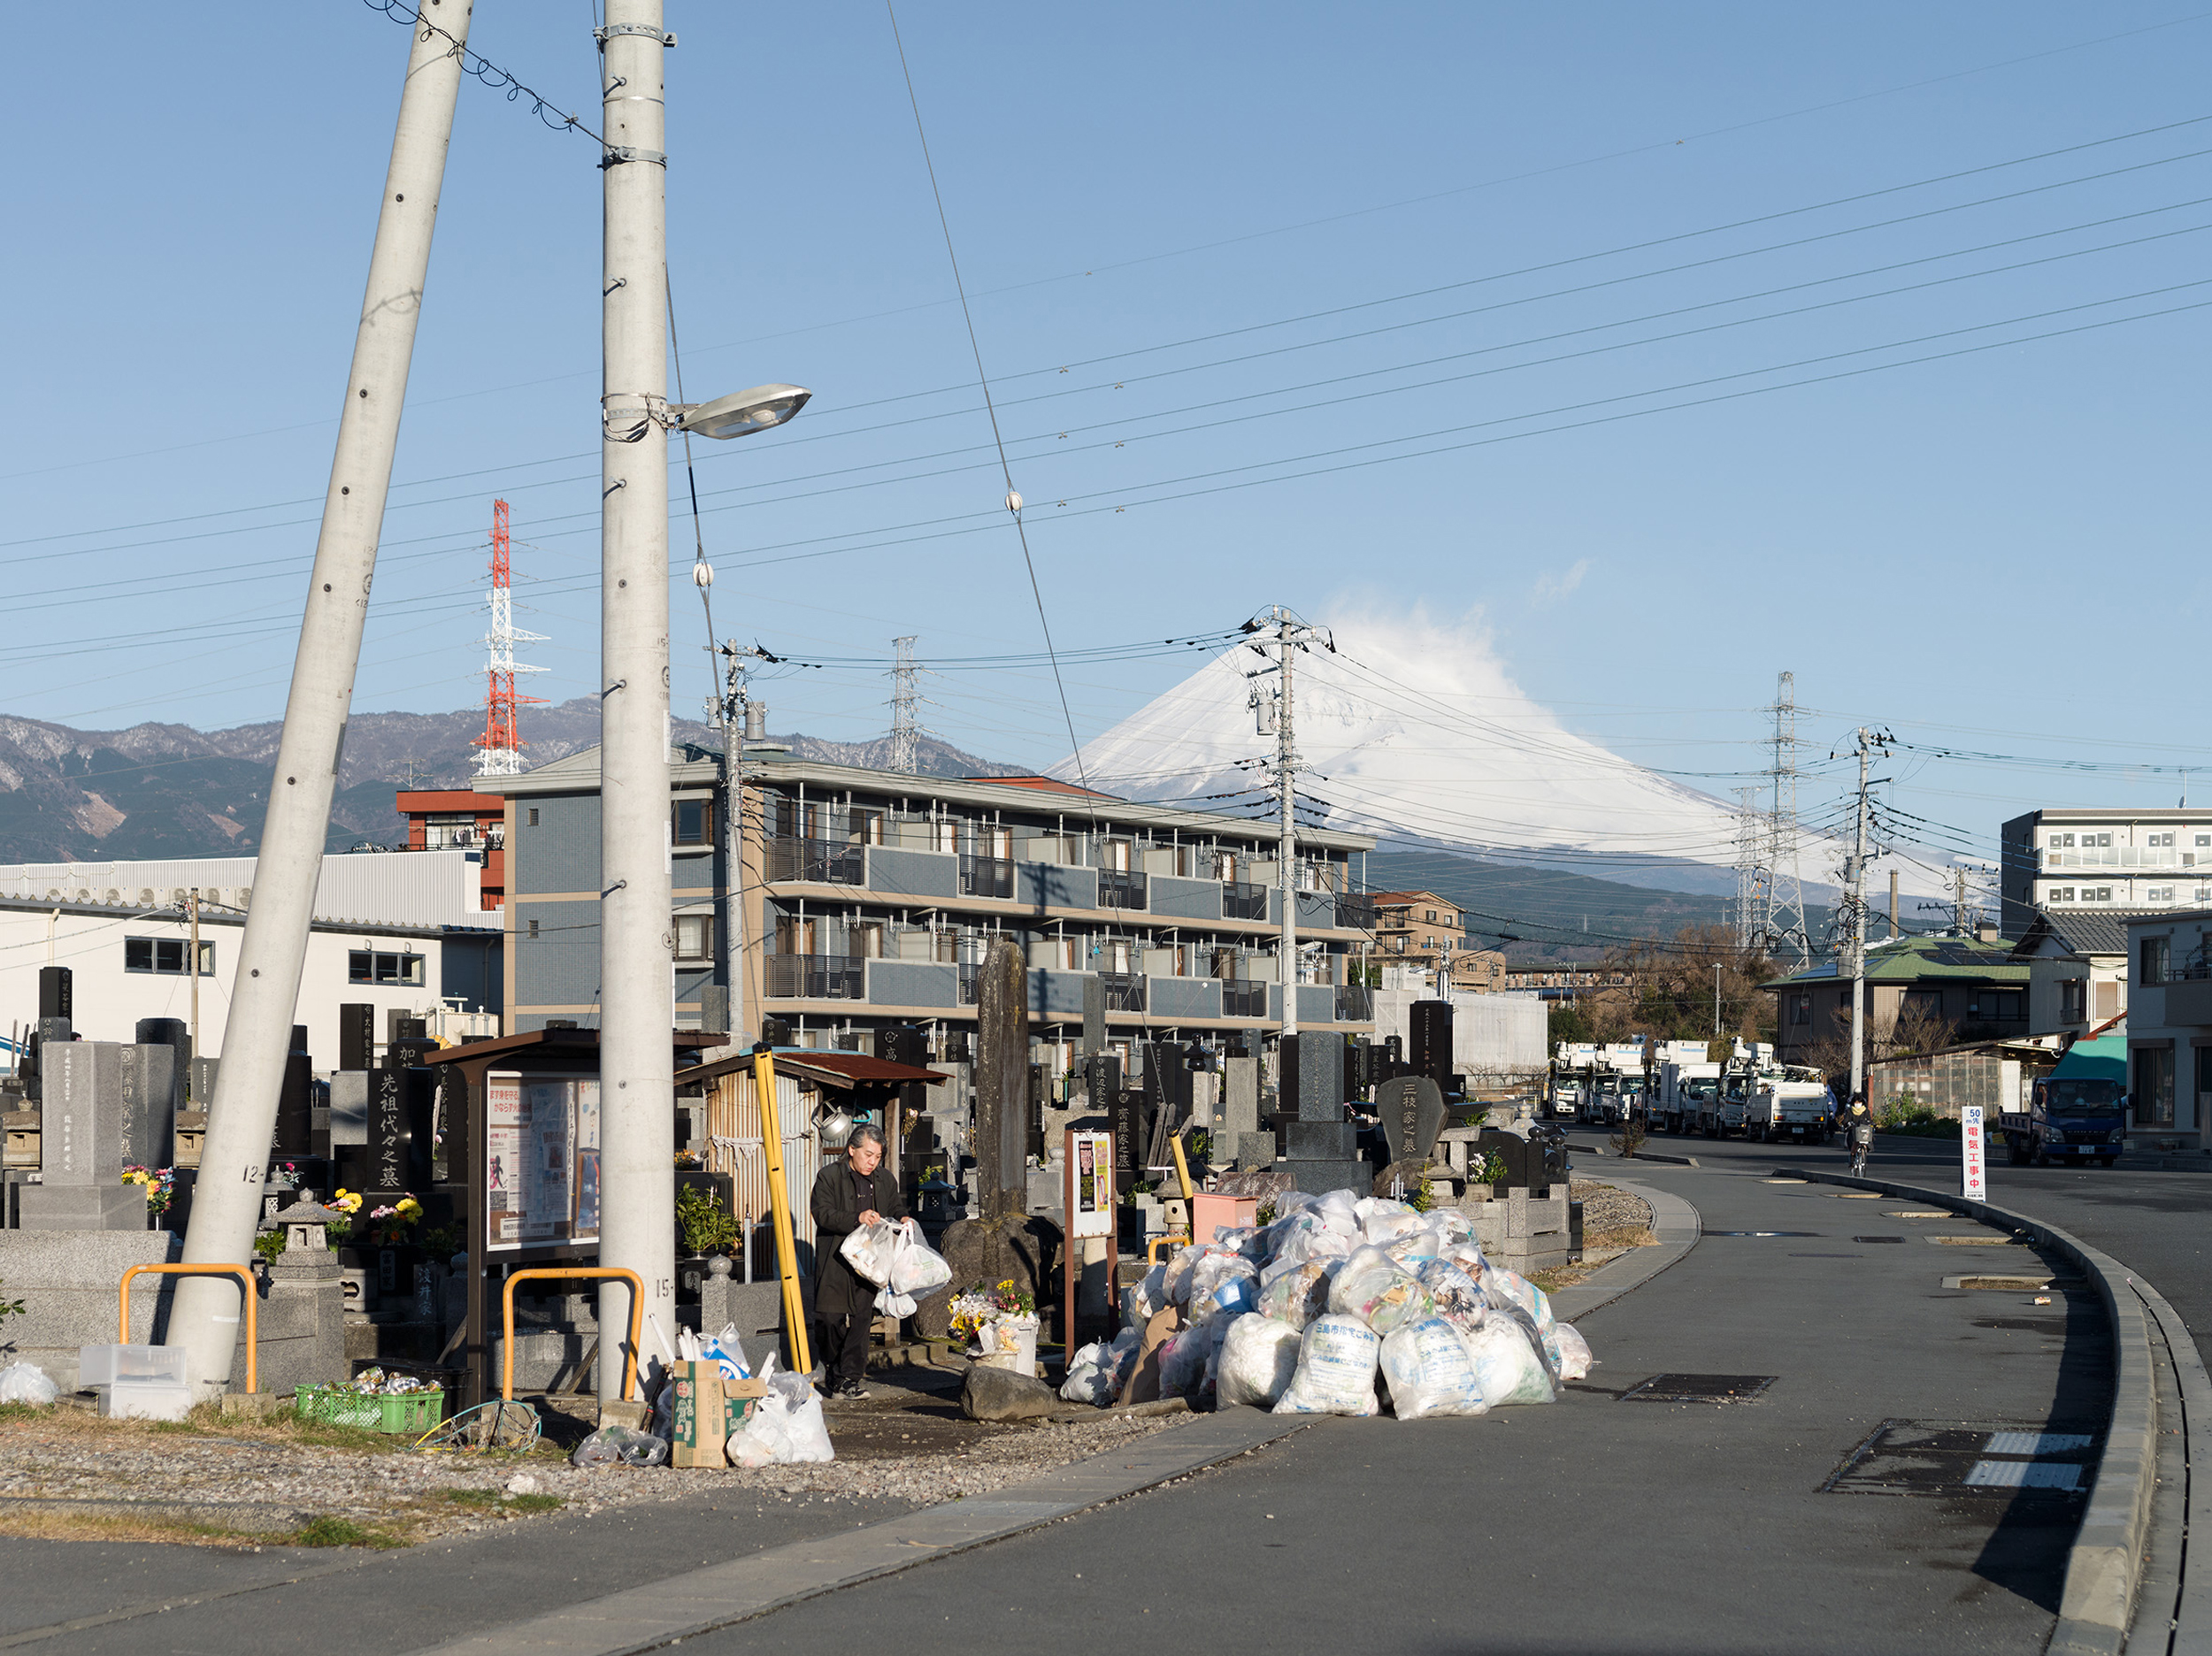 Thirty-six Views of Mount Fuji